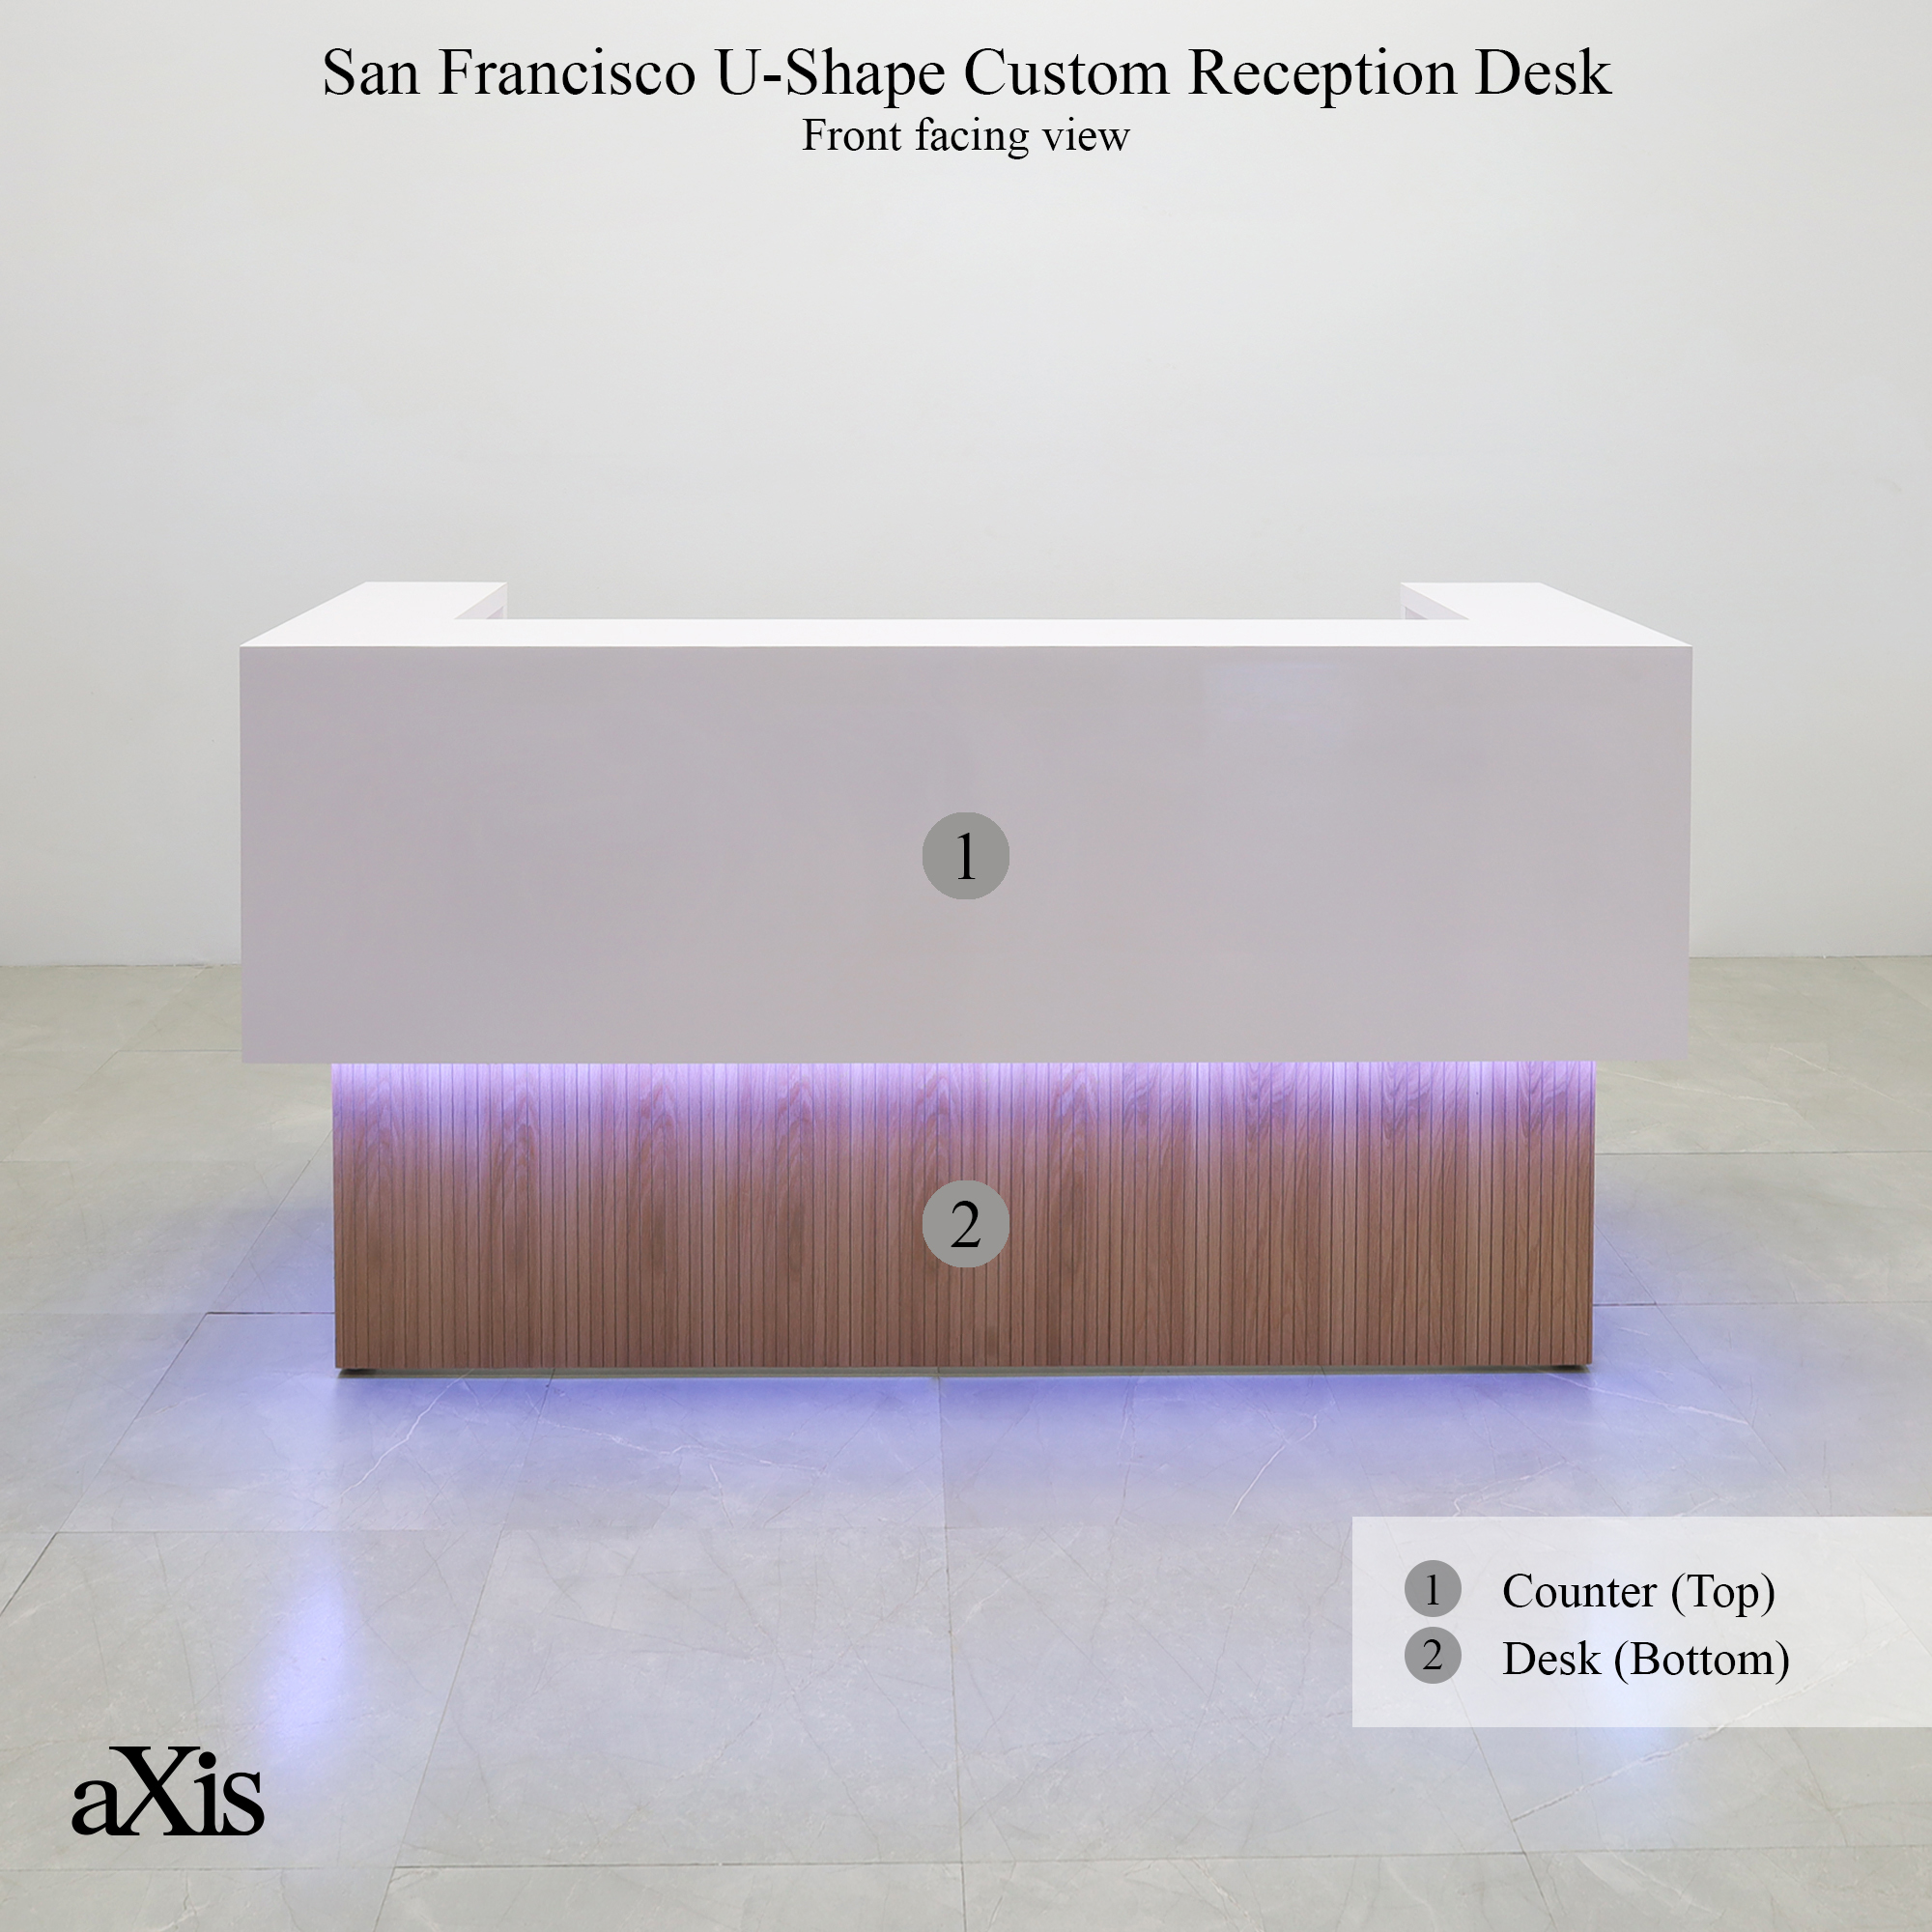 San Francisco U-Shape Custom Reception Desk in white matte laminate counter and white oak tambour desk, with white LED shown here.